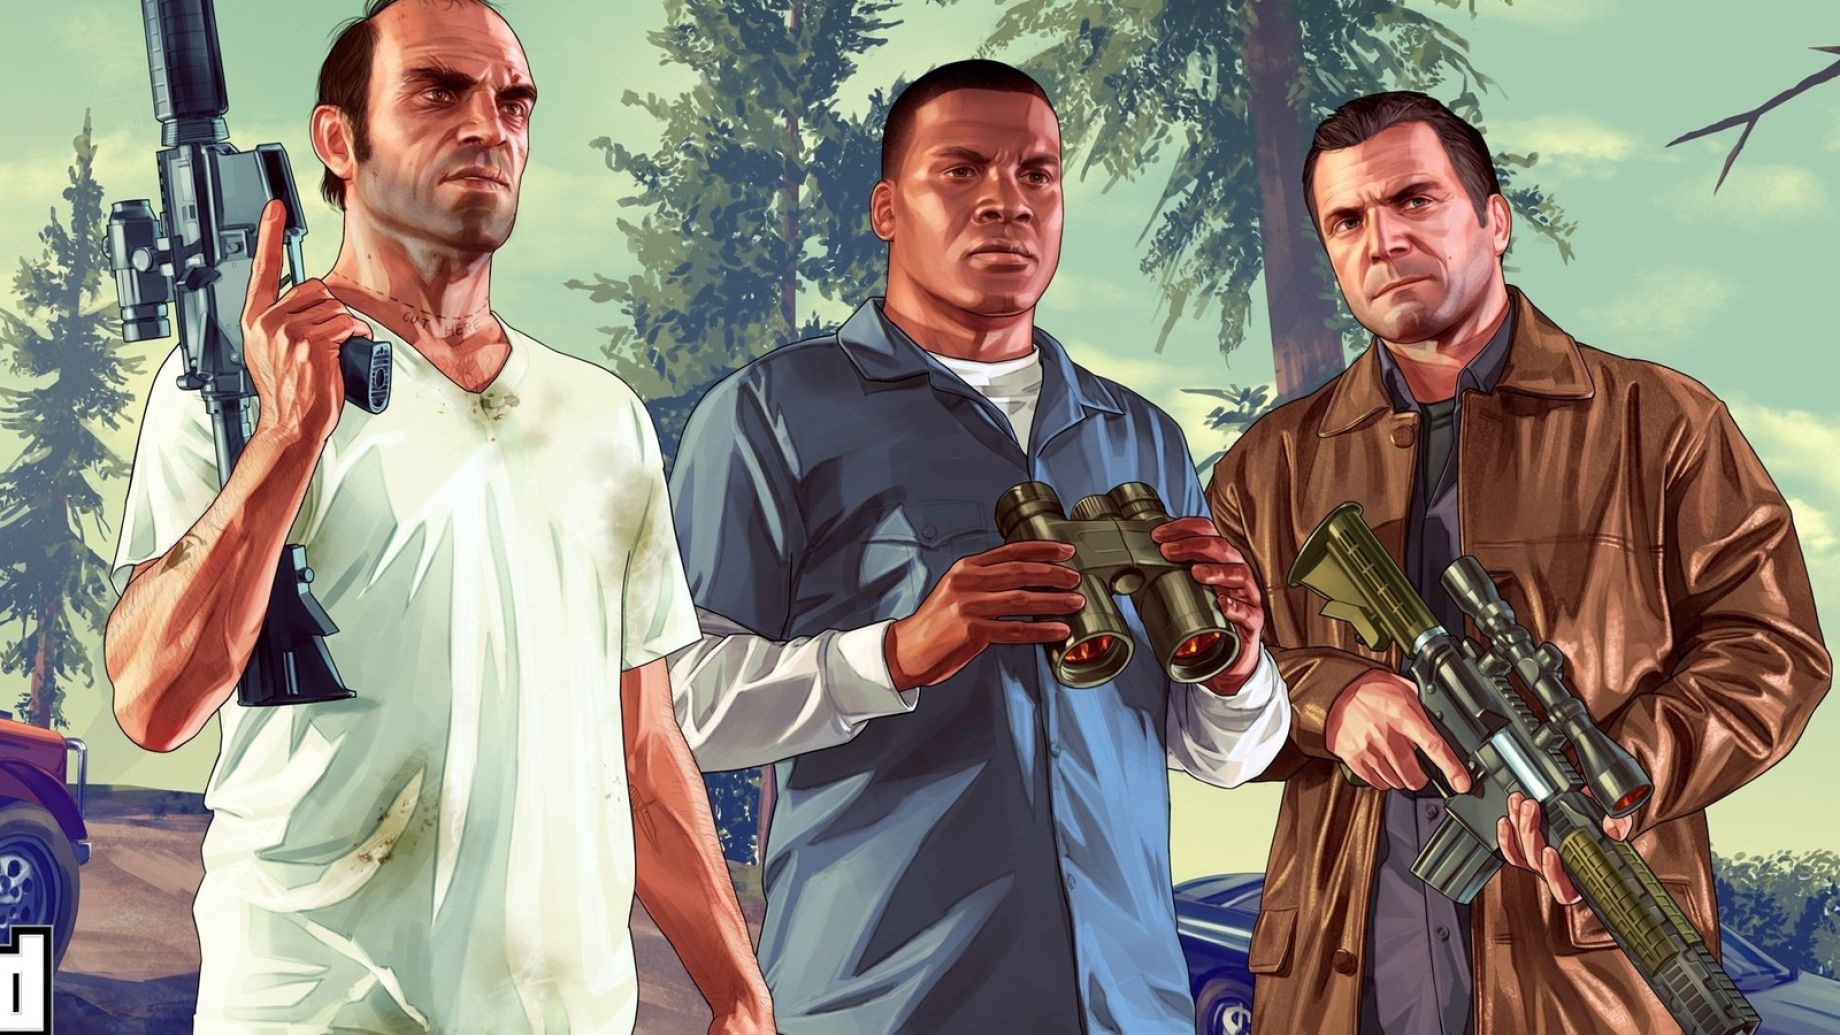 Rockstar Games Confirm GTA 6 Leak Is Indeed Real –